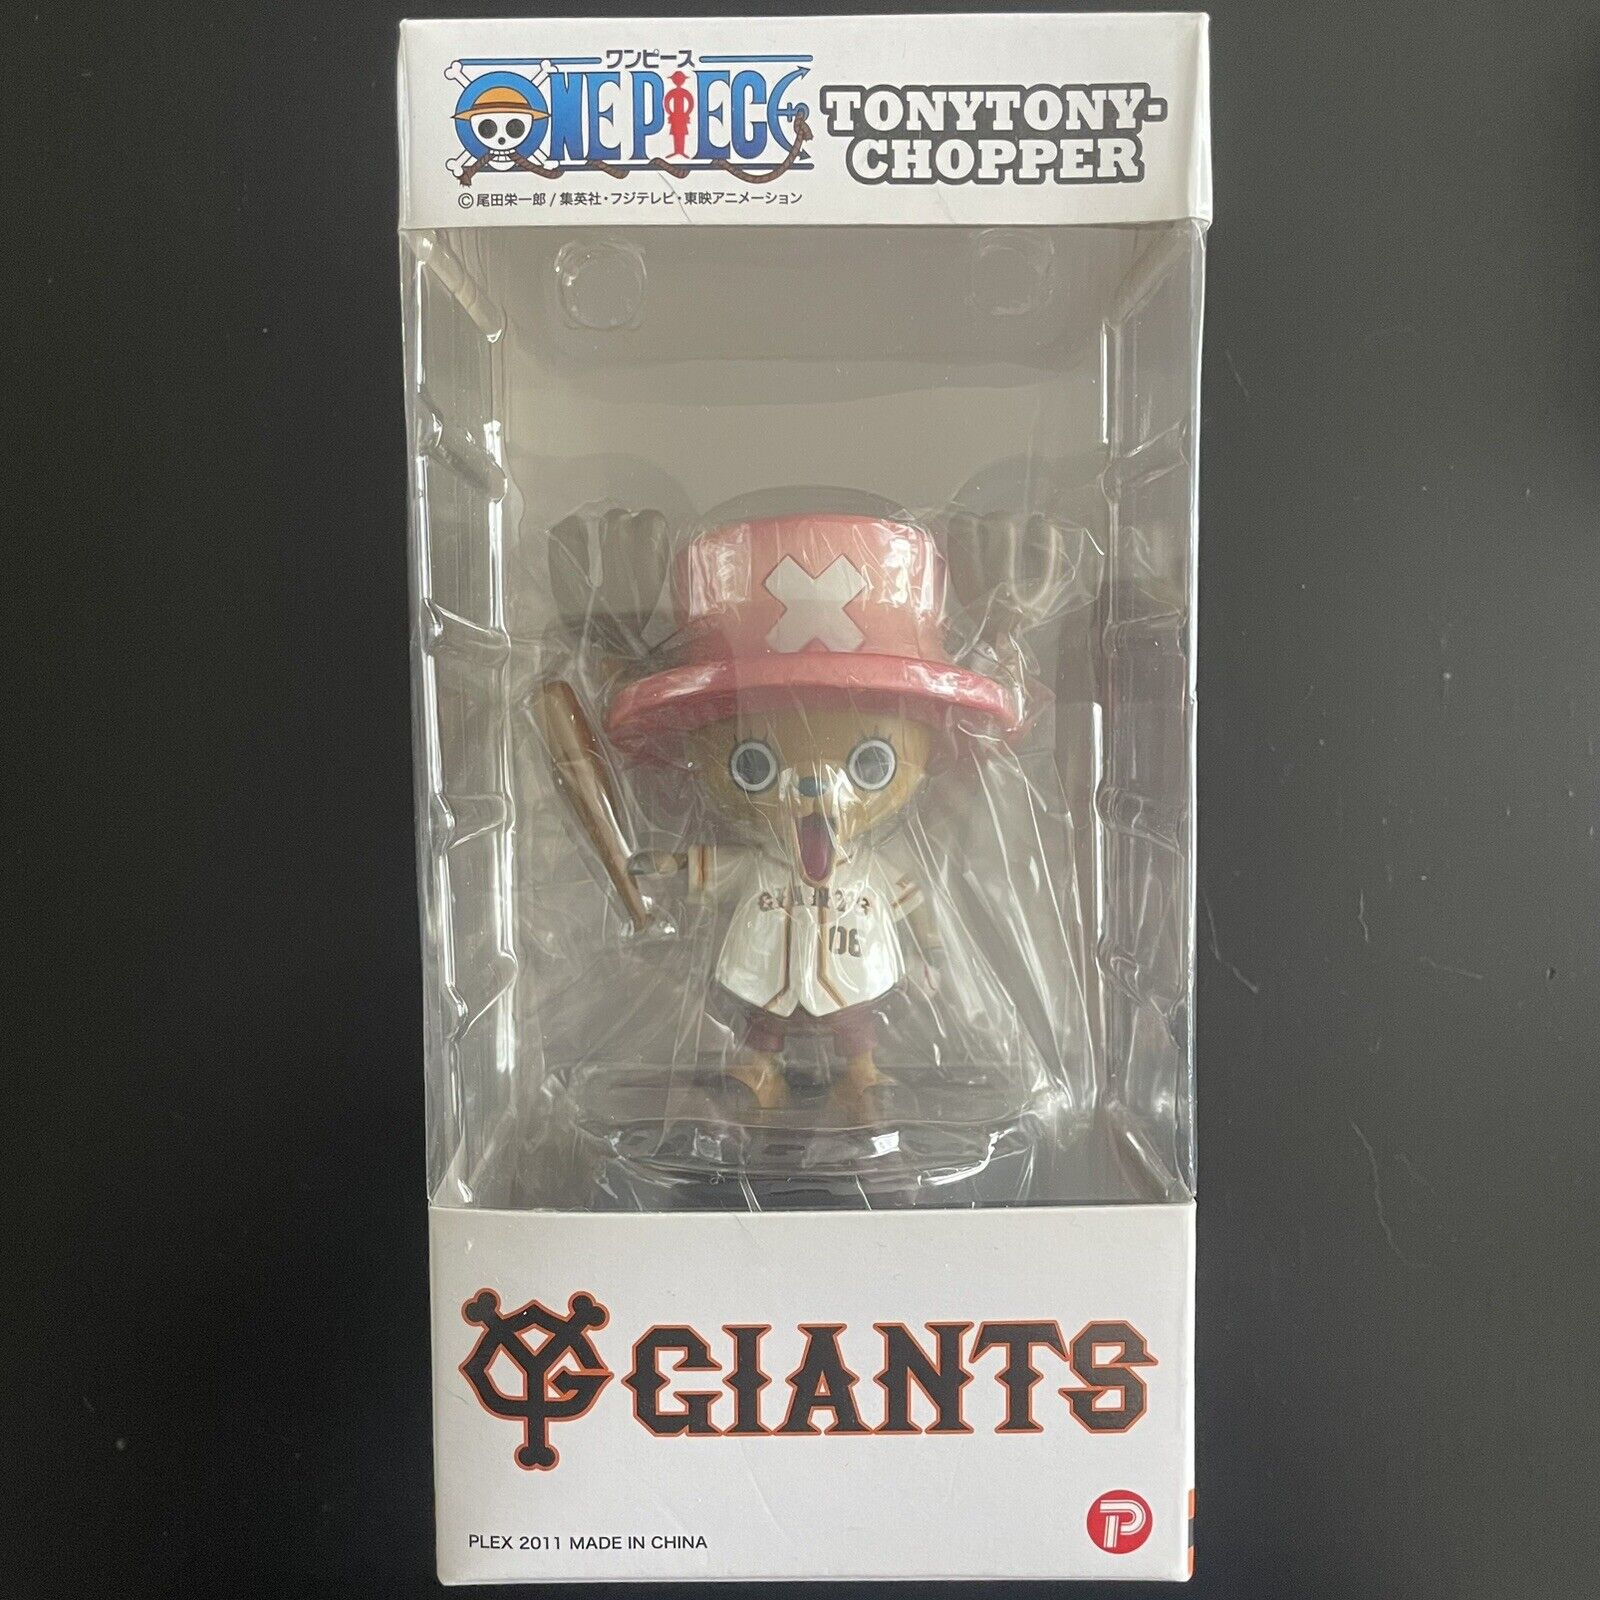 One Piece Tony Chopper Baseball Bobbing Head Figure Giants Ver.